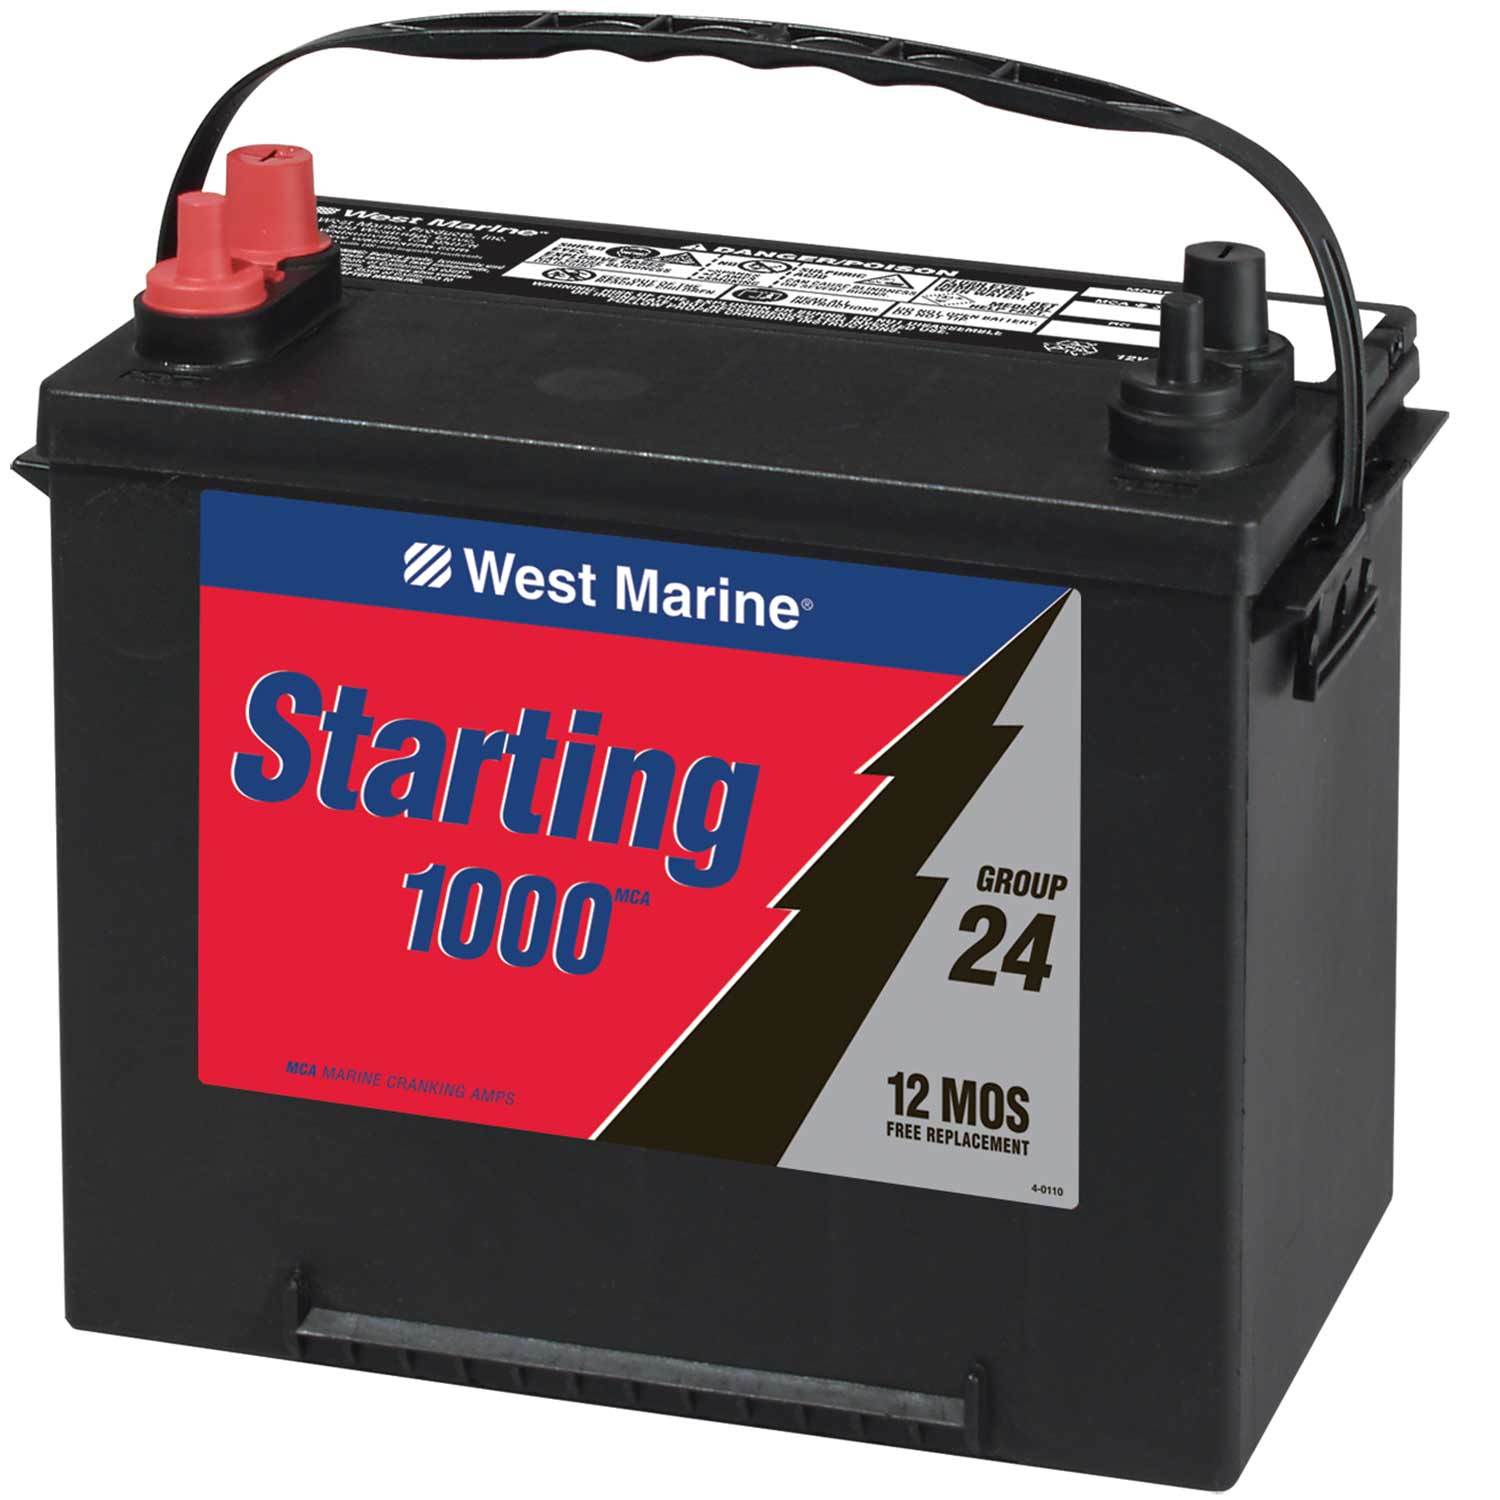 W battery. 24m-XHD 800 cca 1000 MCA аккумулятор. 24volt car Battery started engine Voltage. Battery GRP 4d. 24m-XHD 800 cca 1000 MCA аккумулятор купить.